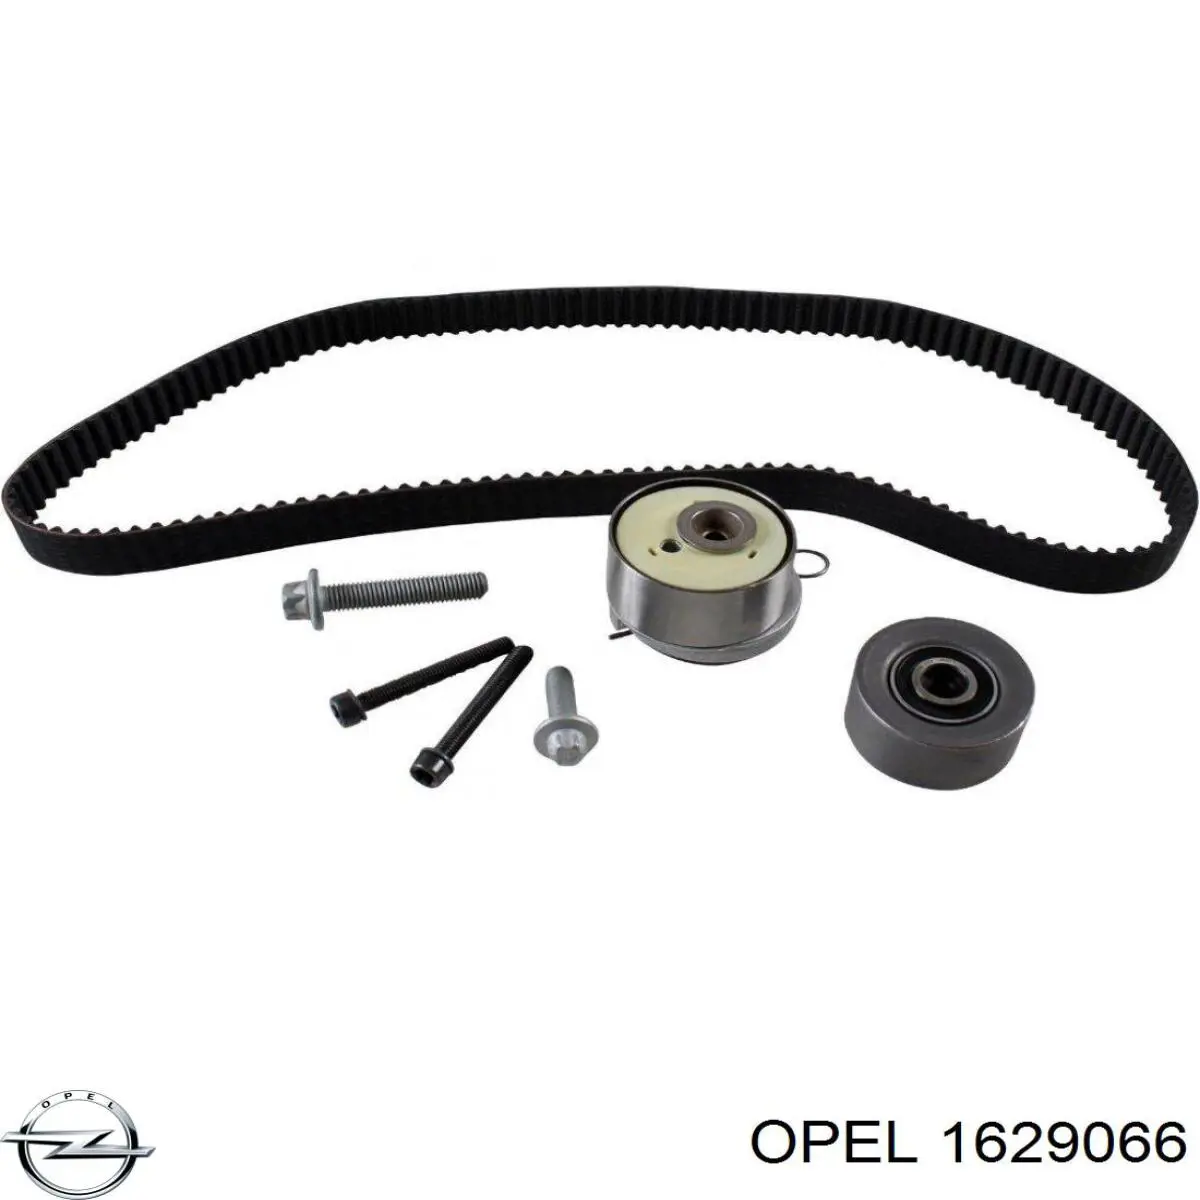 1629066 Opel kit de correa de distribución